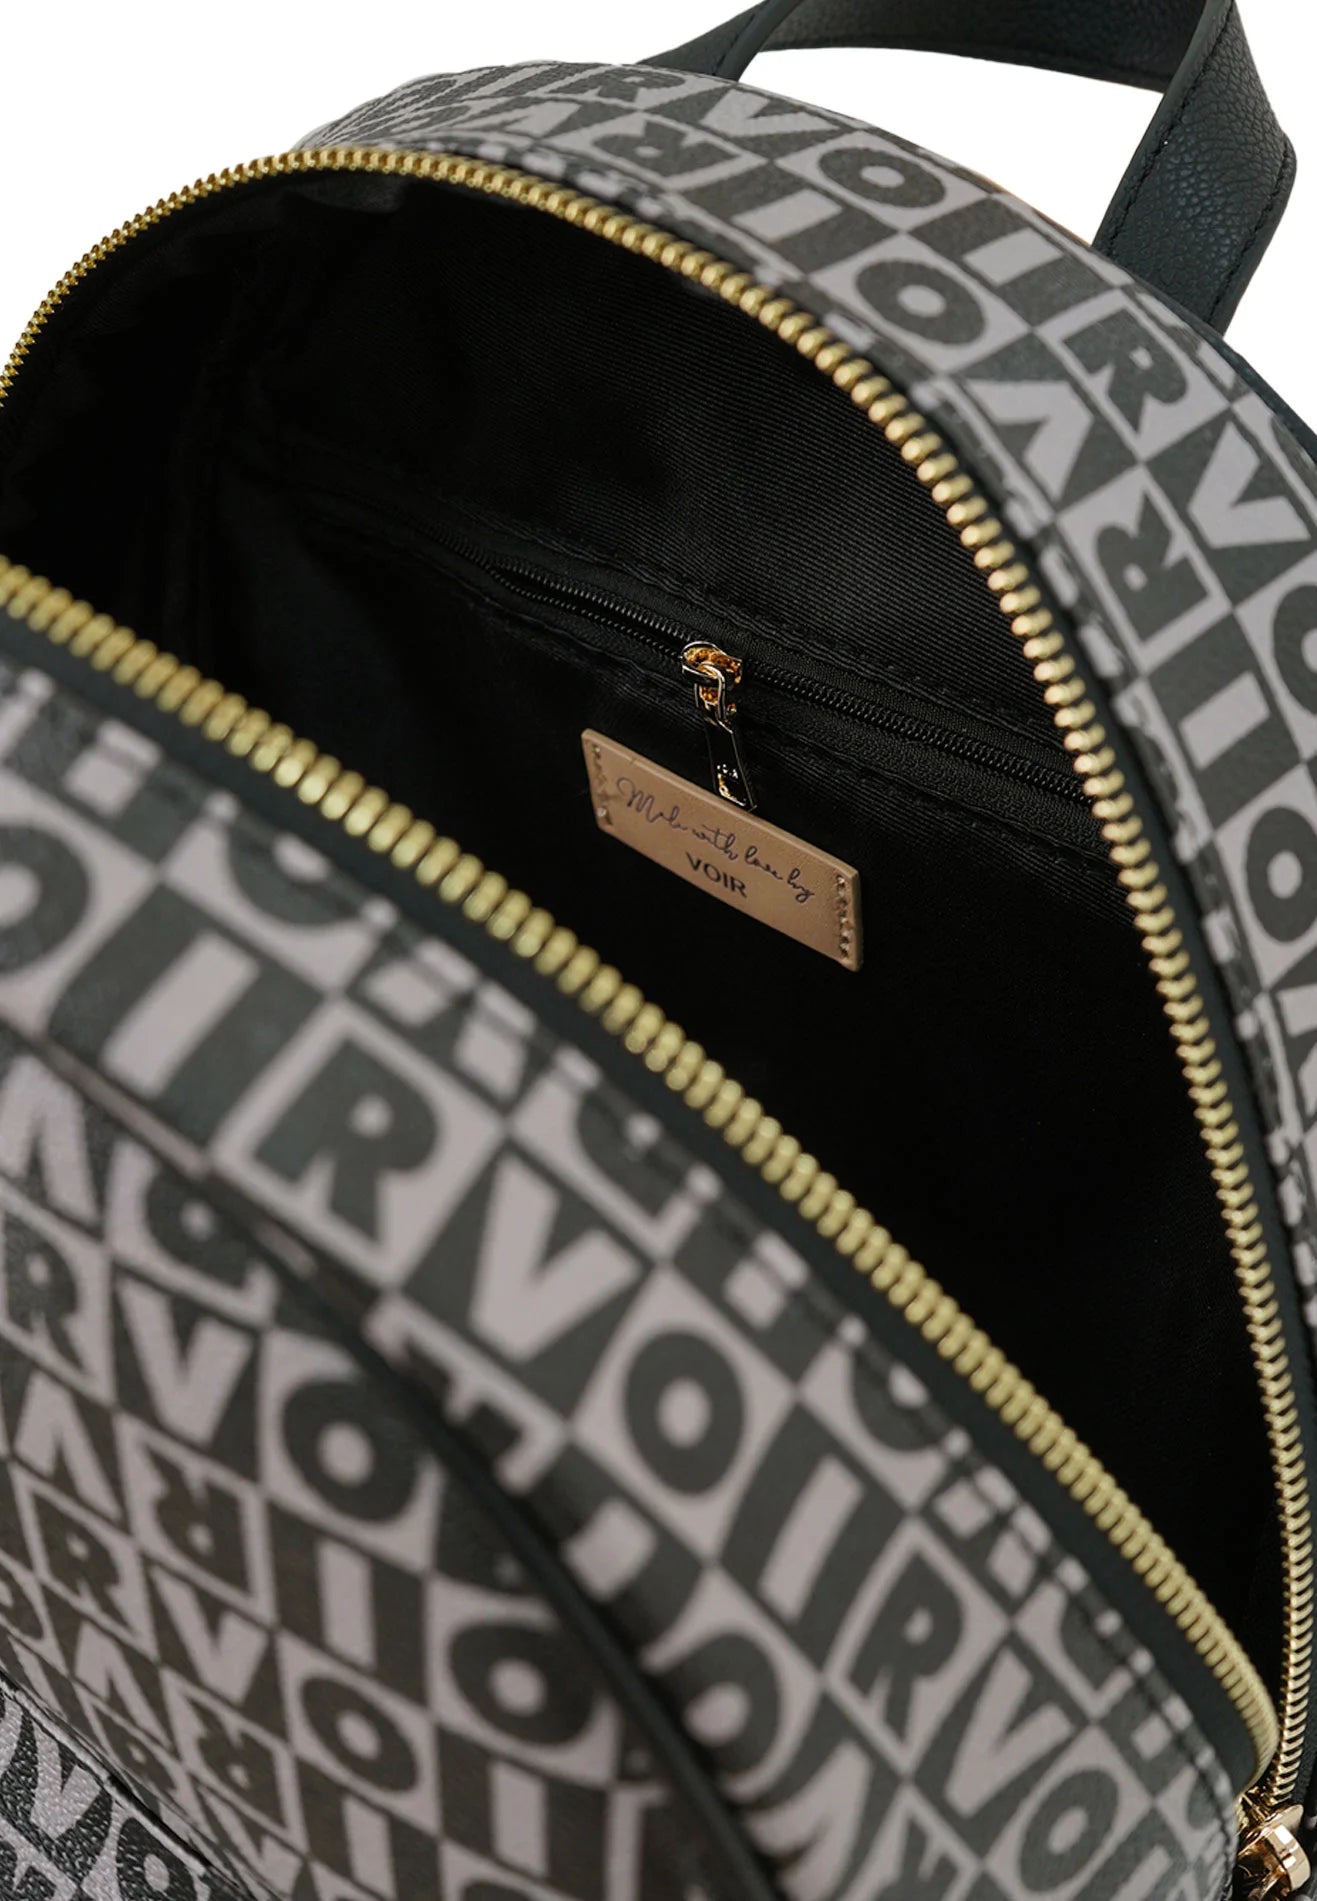 VOIR Monogram 'V' Backpack